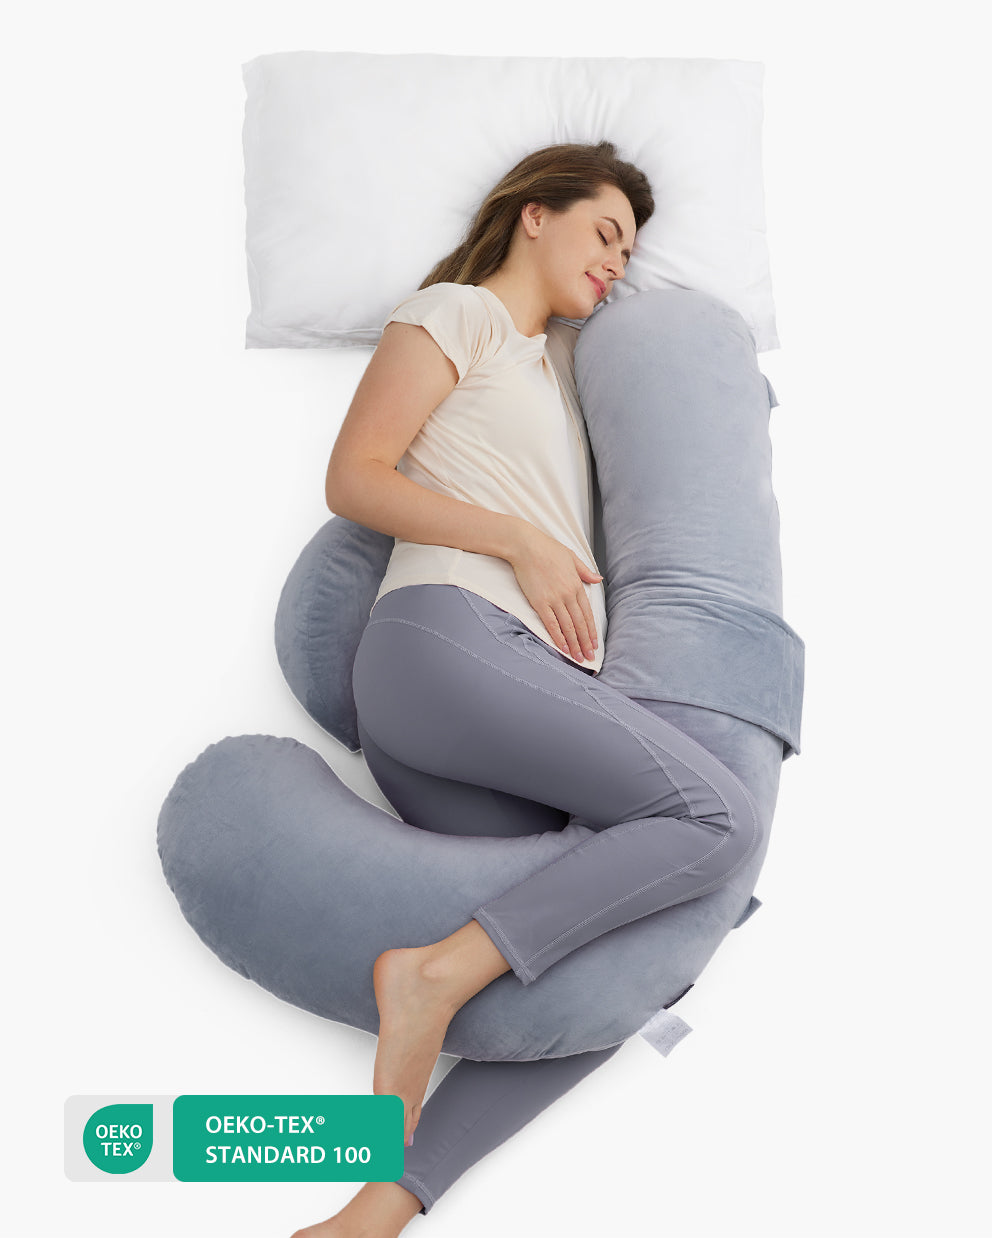 Momcozy Adjustable Nursing Pillow Gray MCMYP01-GR00NB-MS - Best Buy